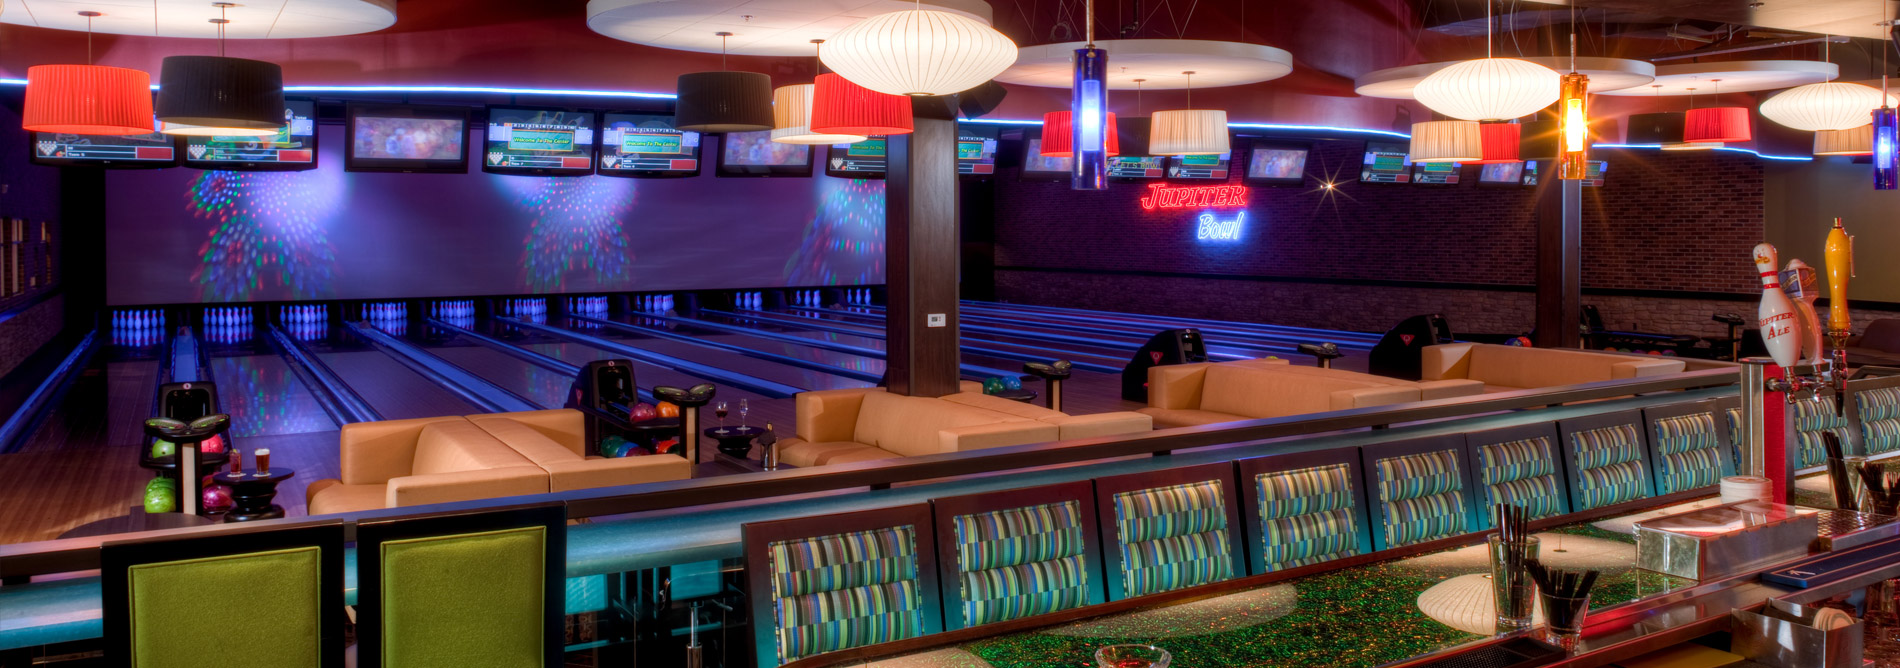 QUBICAAMF-bowling-hybrid-Jupiter-Bowl-banner.jpg